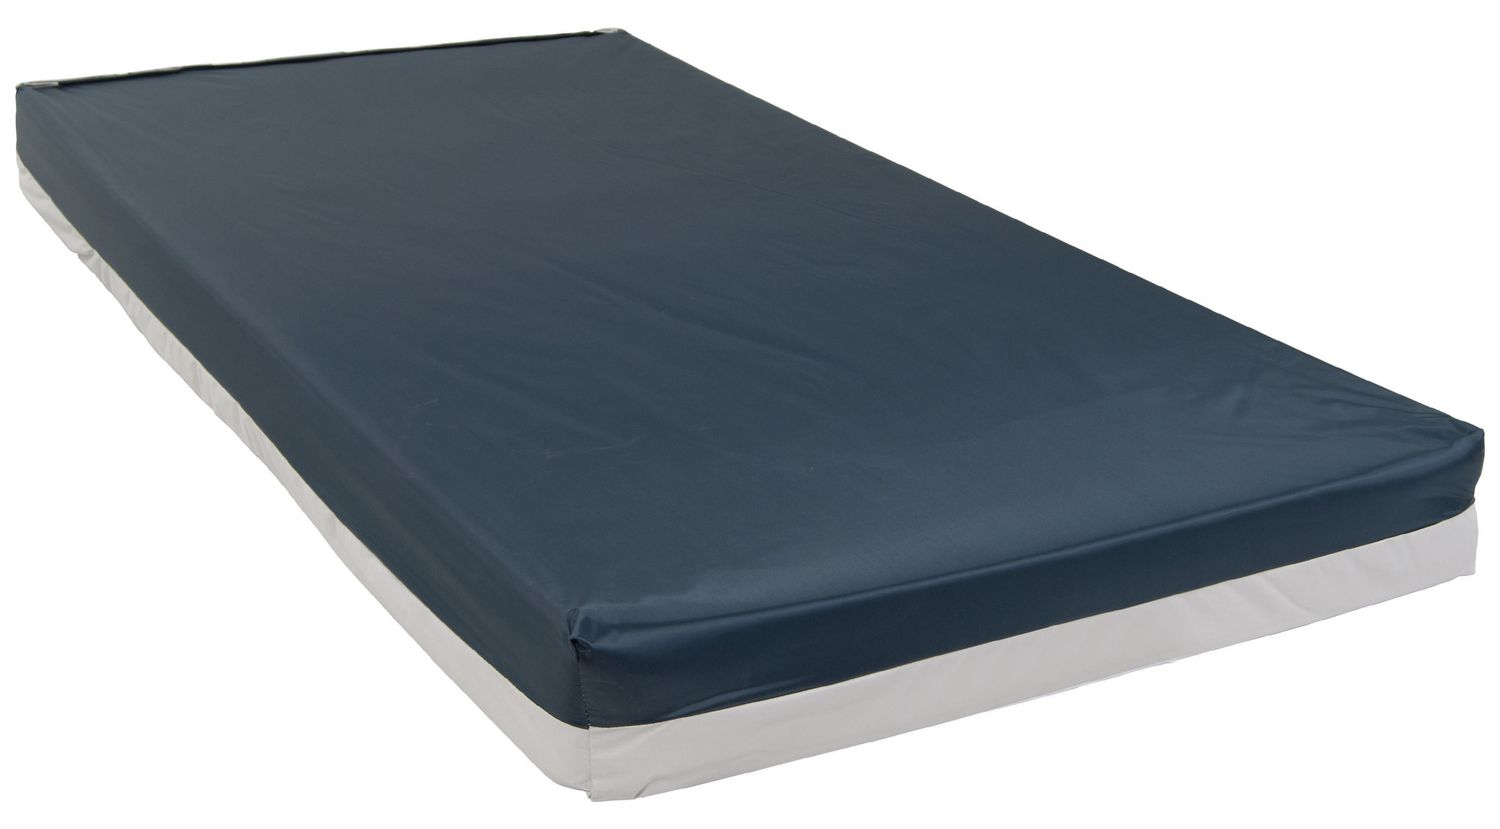 bariatric hospital bed mattress dimensions